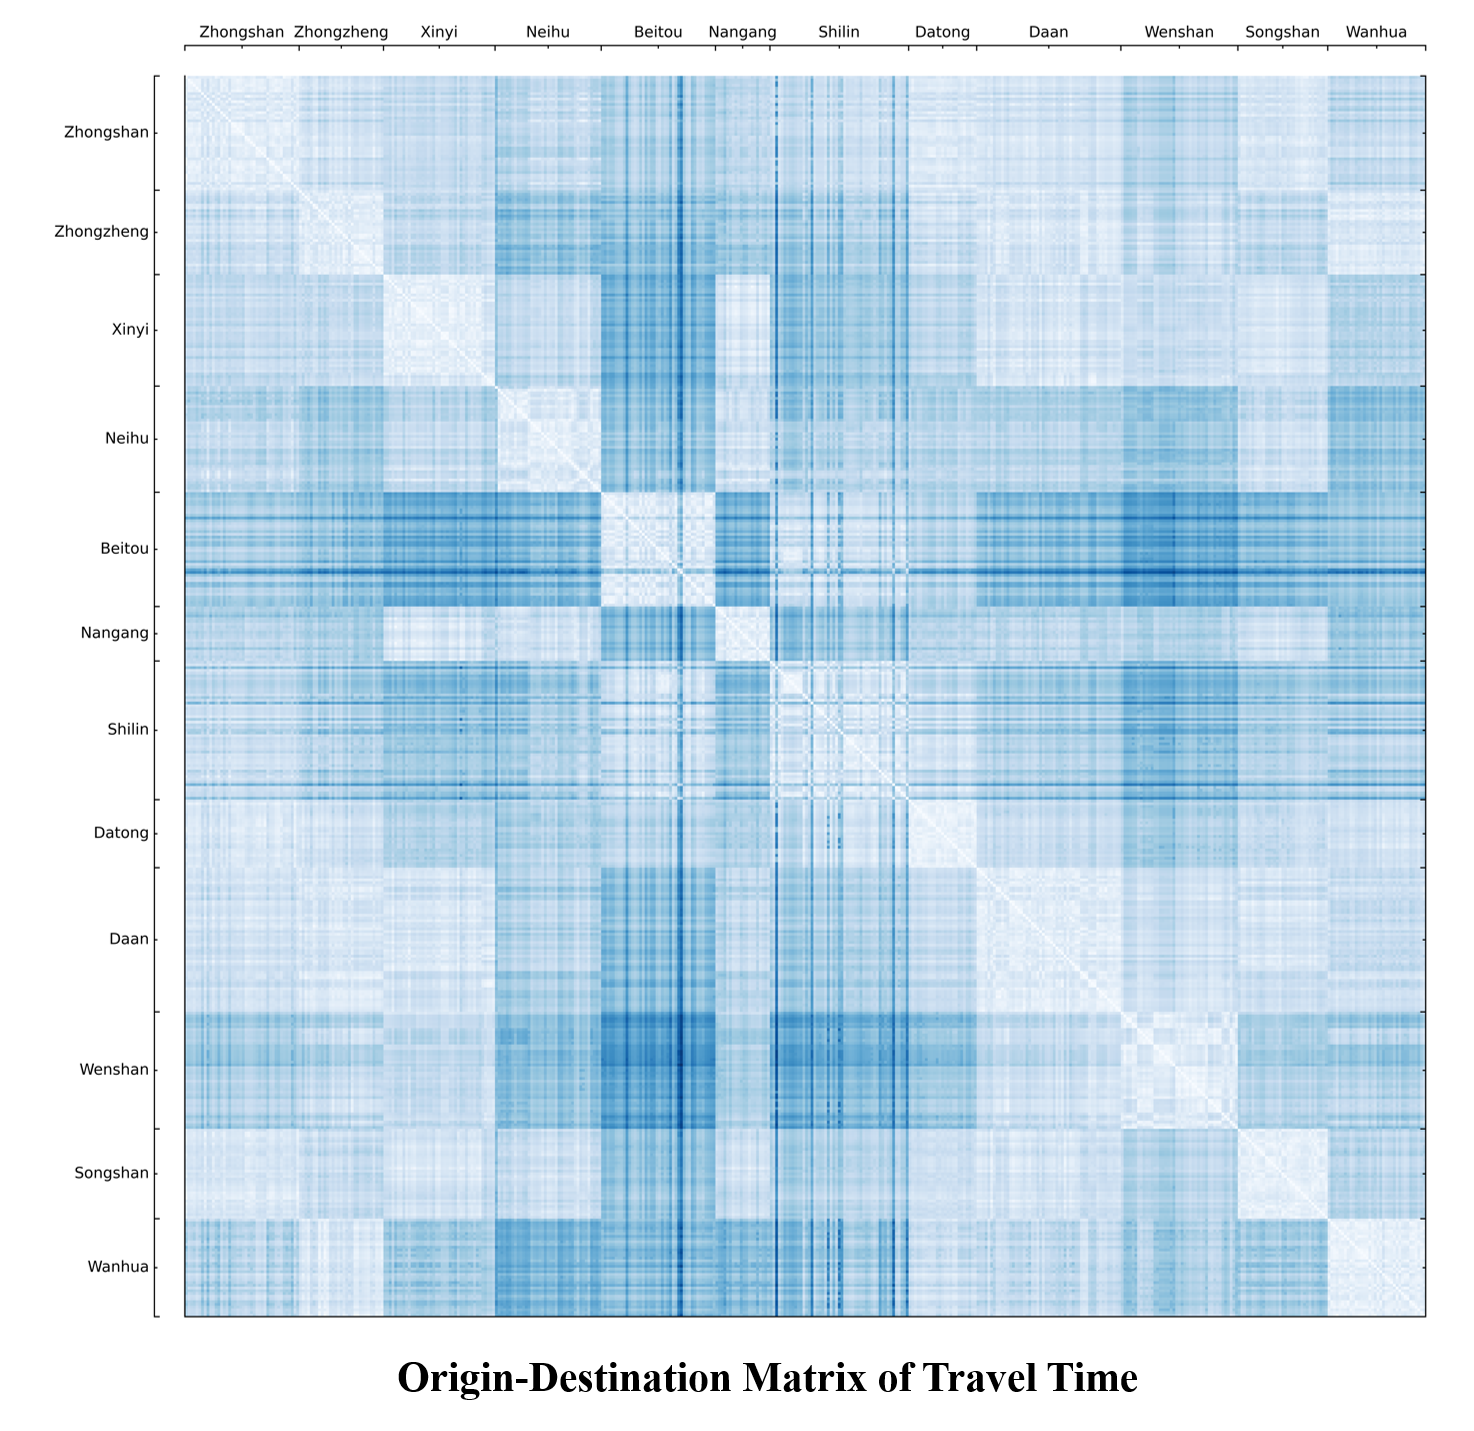 Origin-Destination Matrix of Travel Time